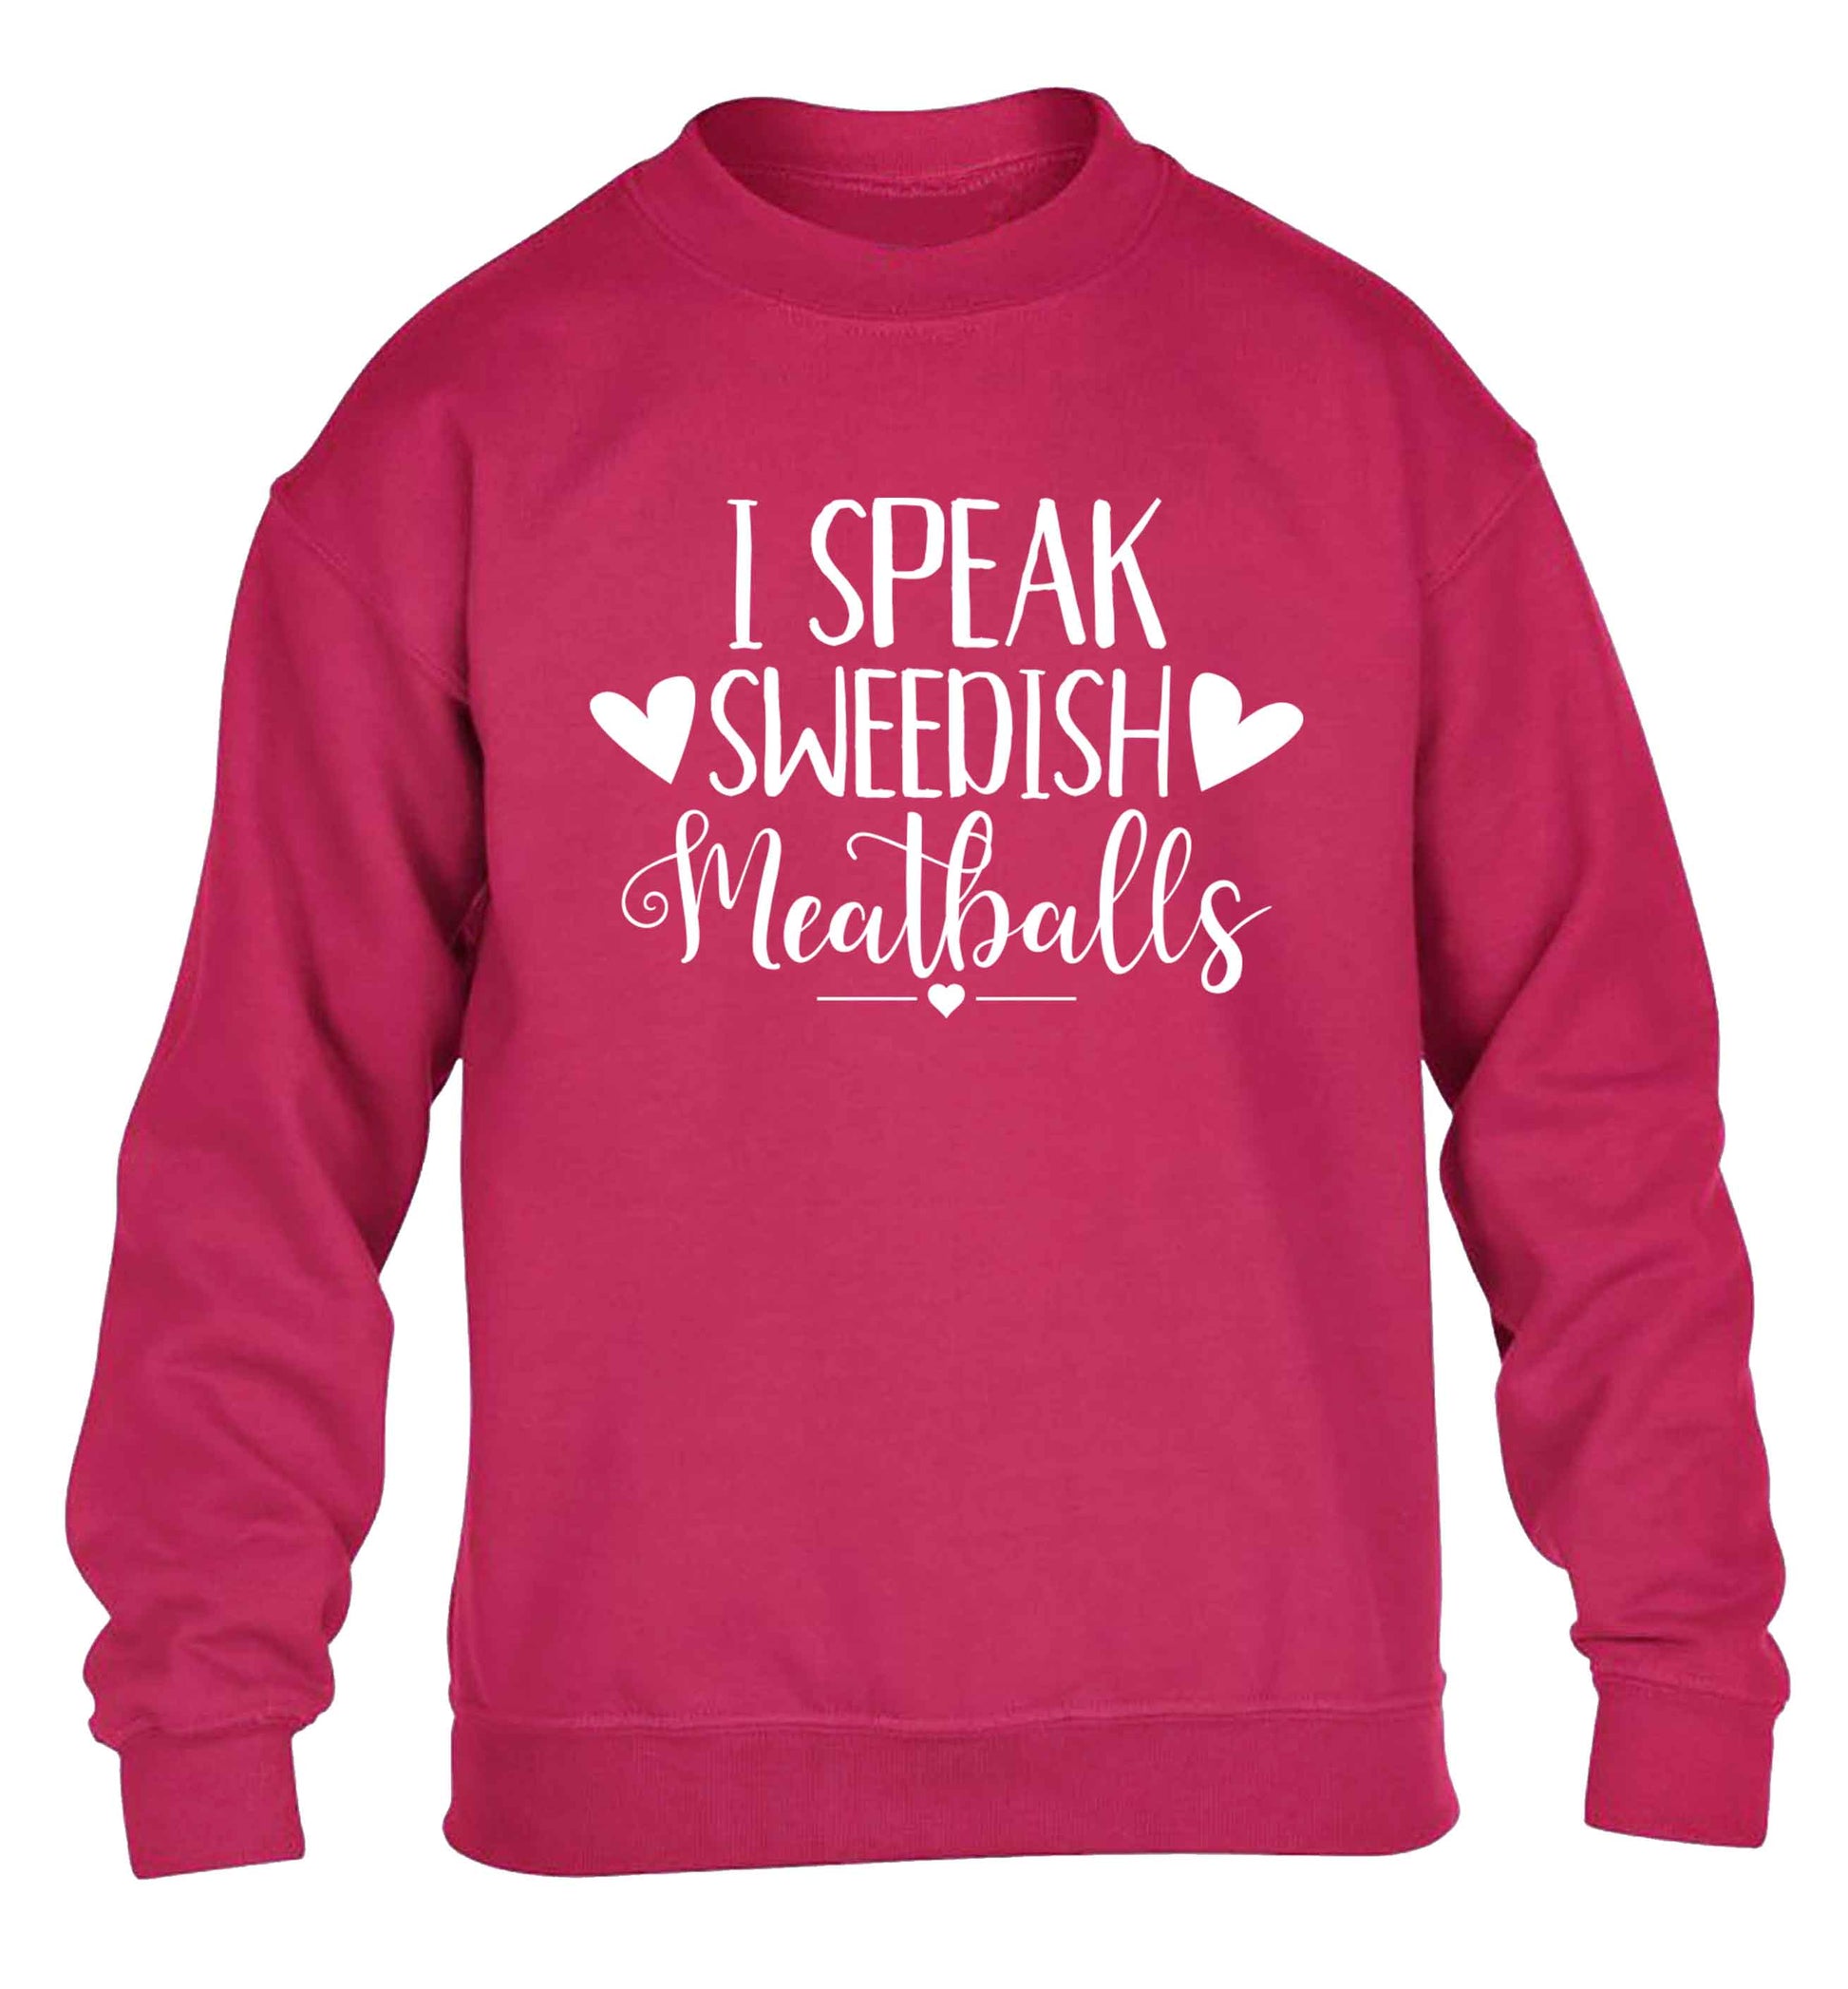 I speak sweedish...meatballs children's pink sweater 12-13 Years